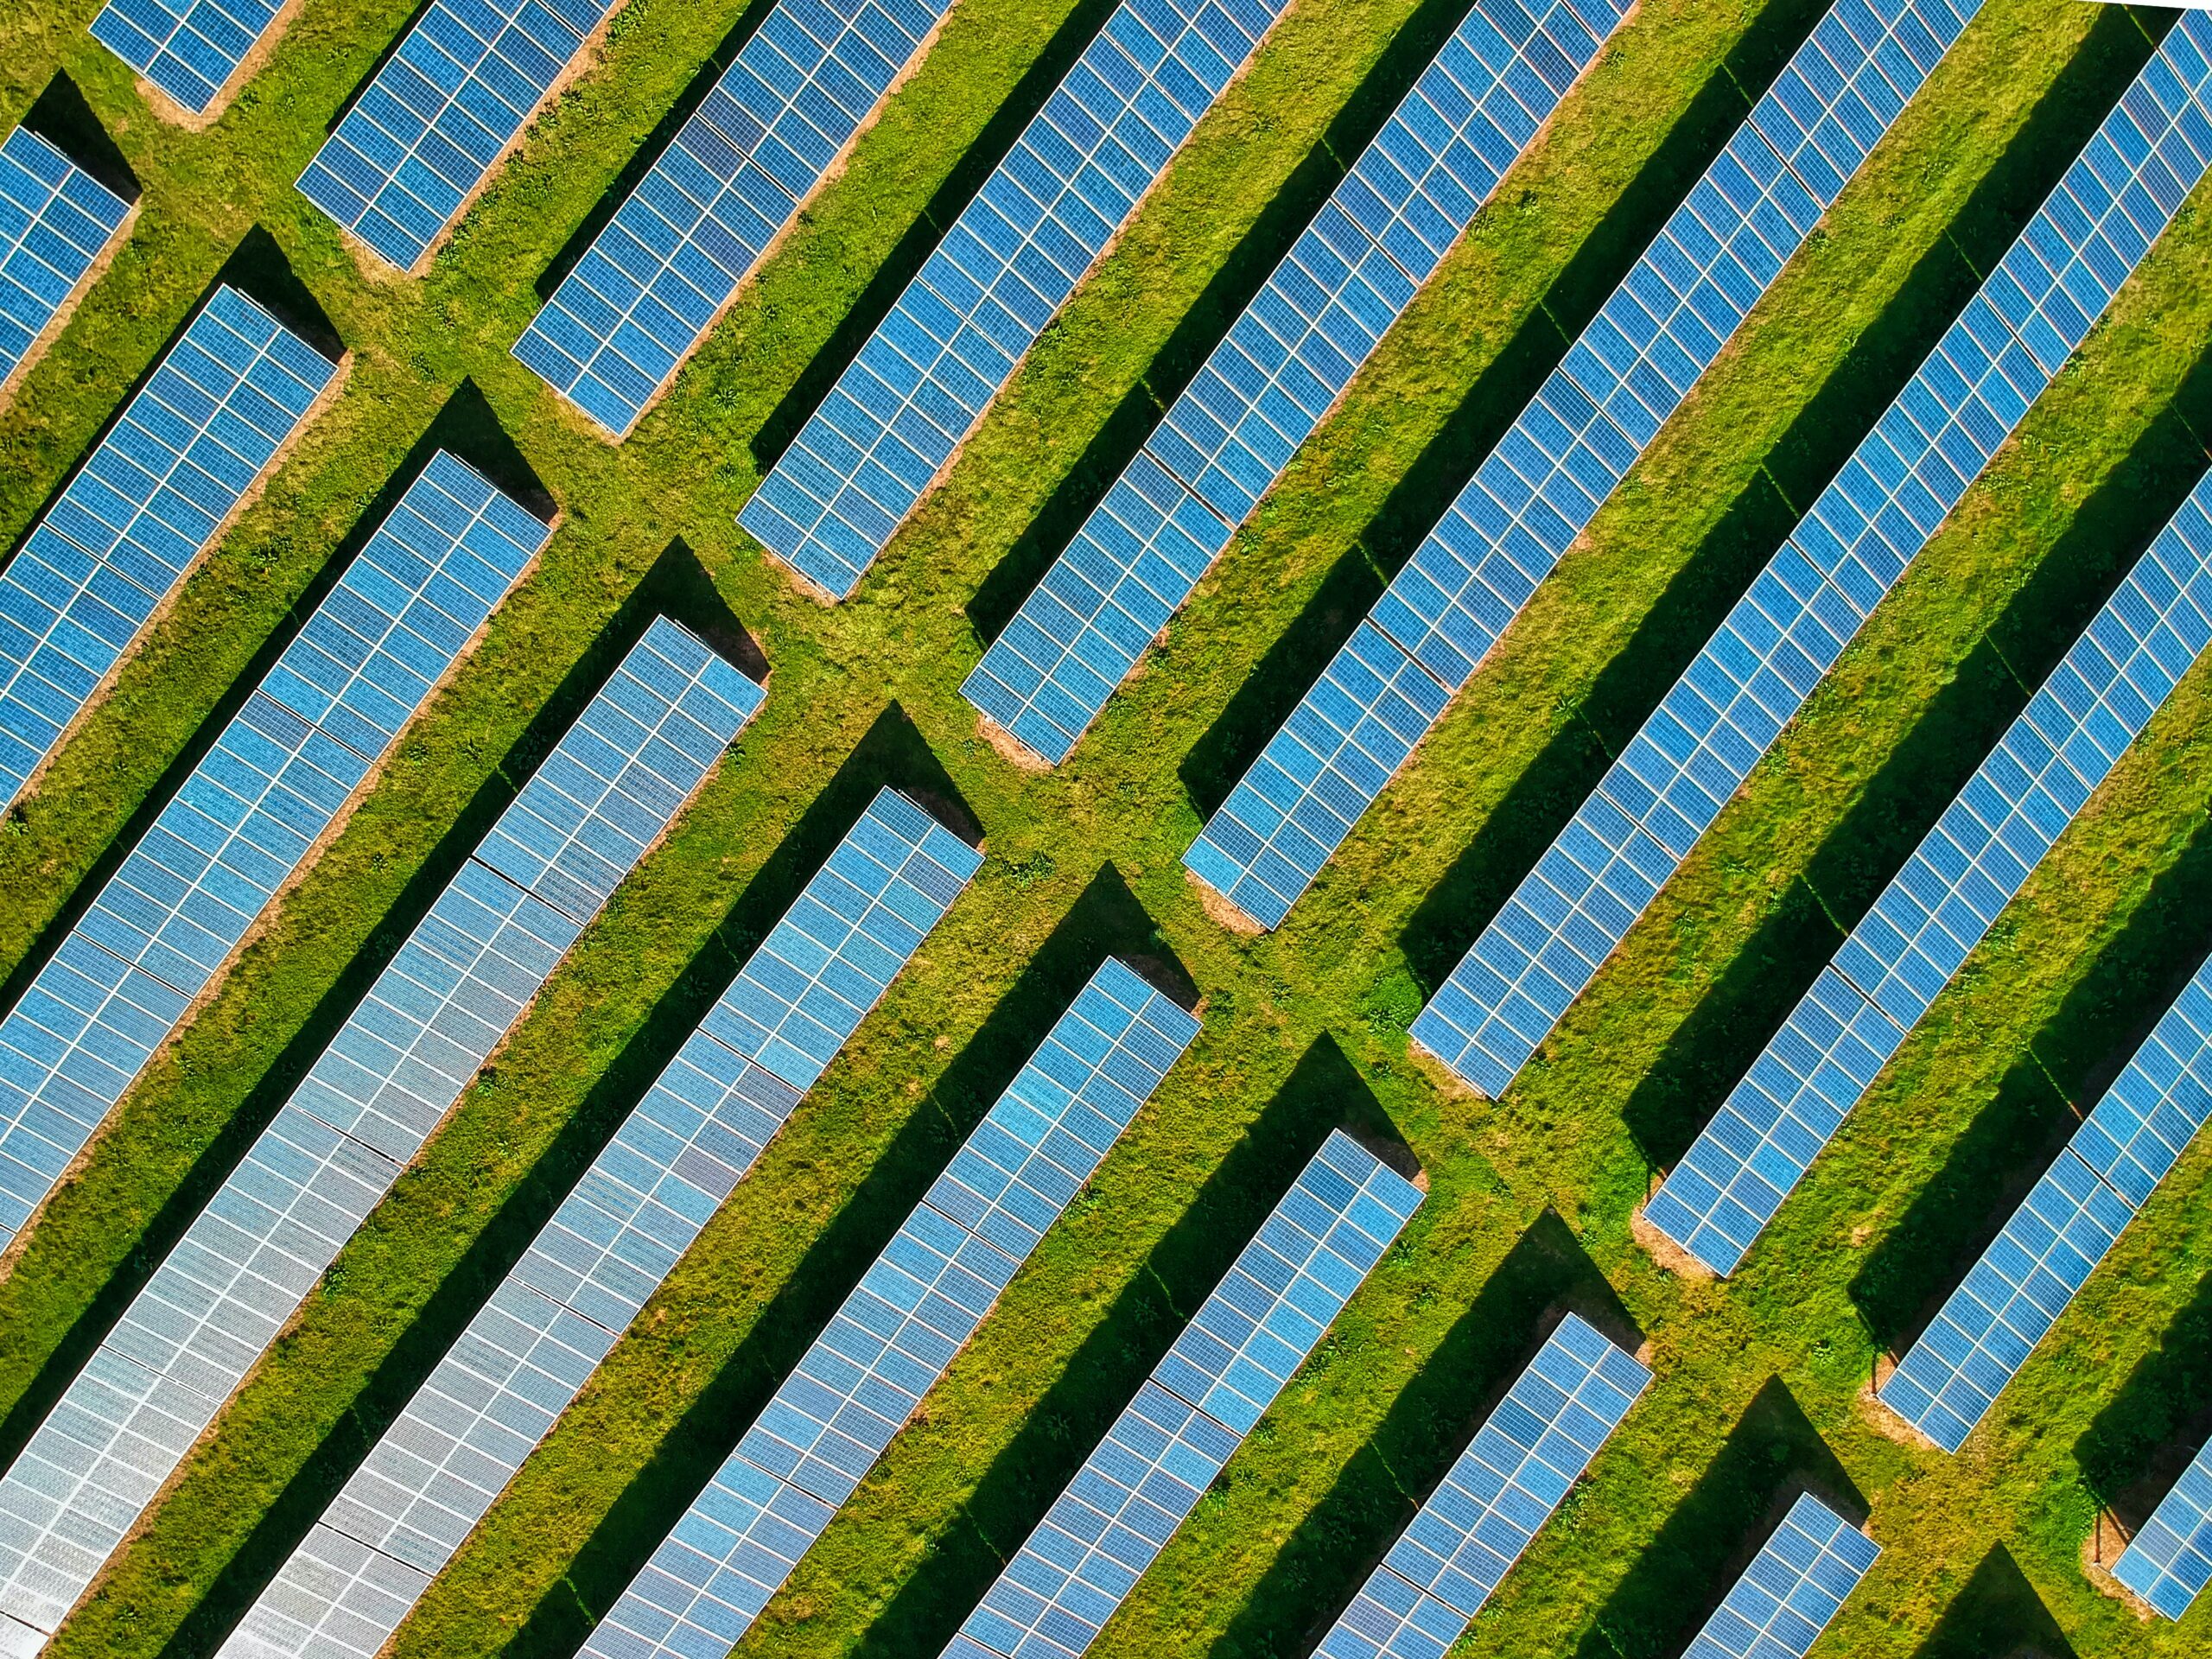 Aerial view of solar farm